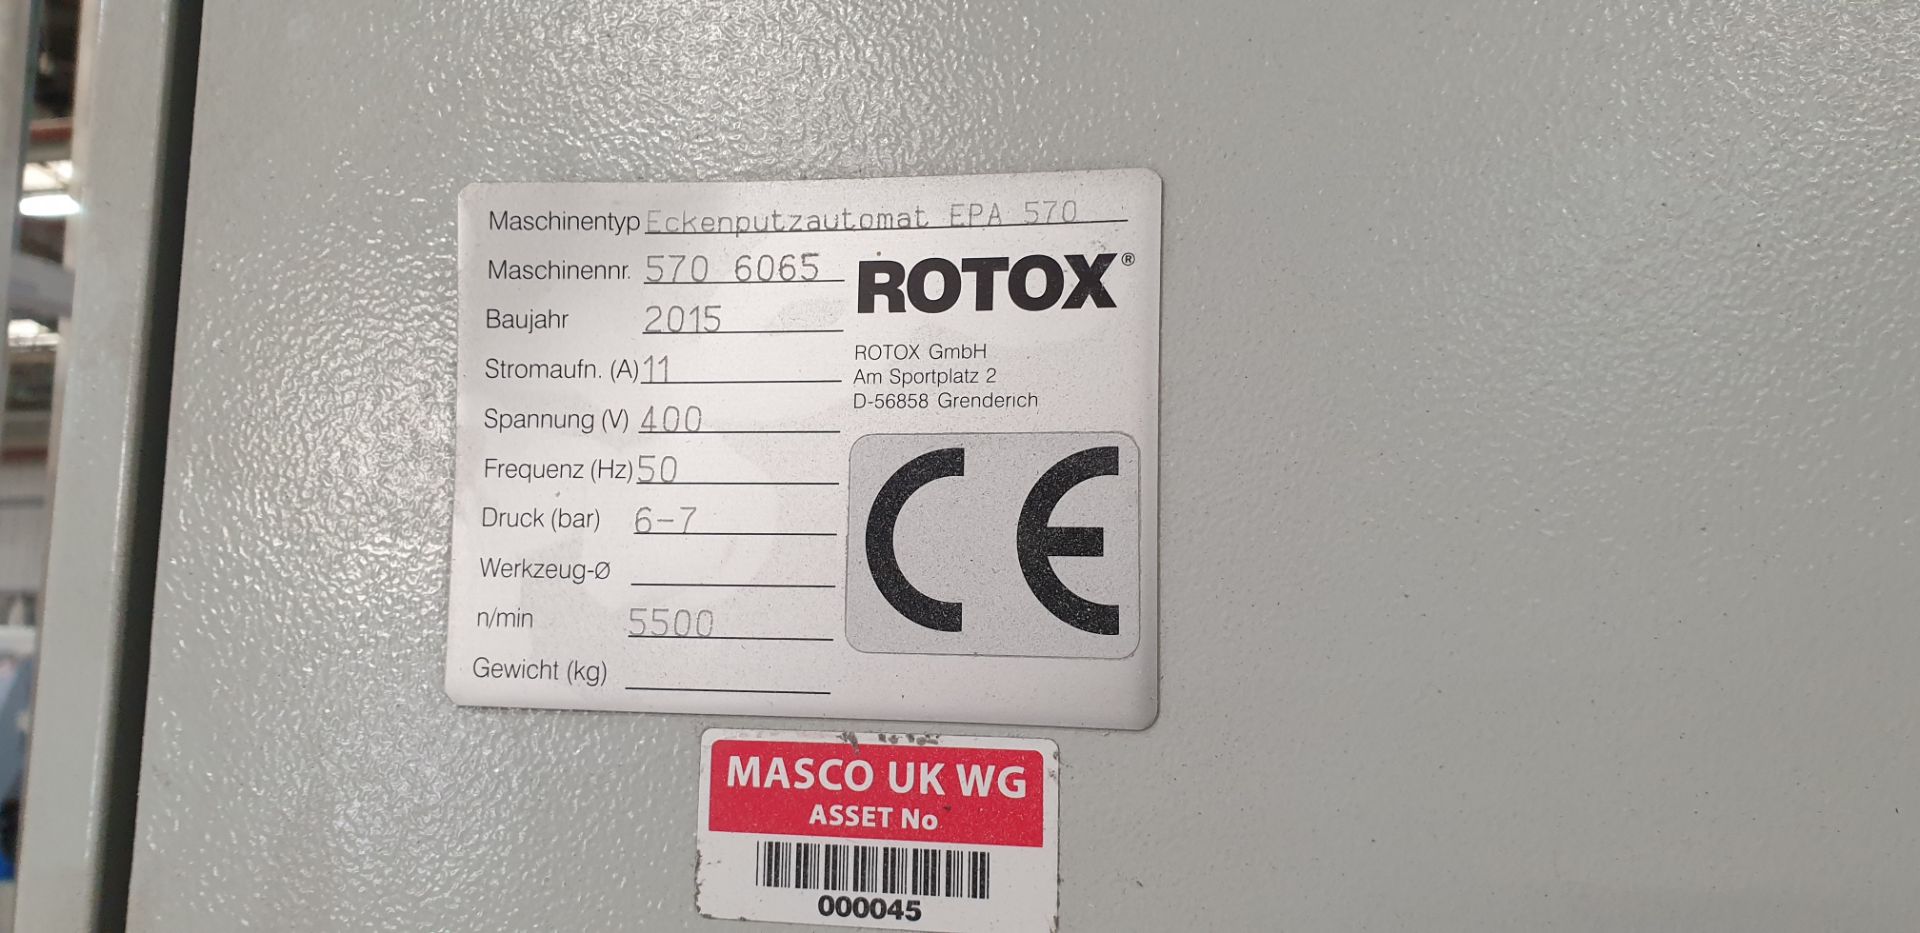 1: Rotox, EKA 570, Corner Cleaner, Serial Number: 570 6065, Year of Manufacture: 2015 - Image 3 of 6